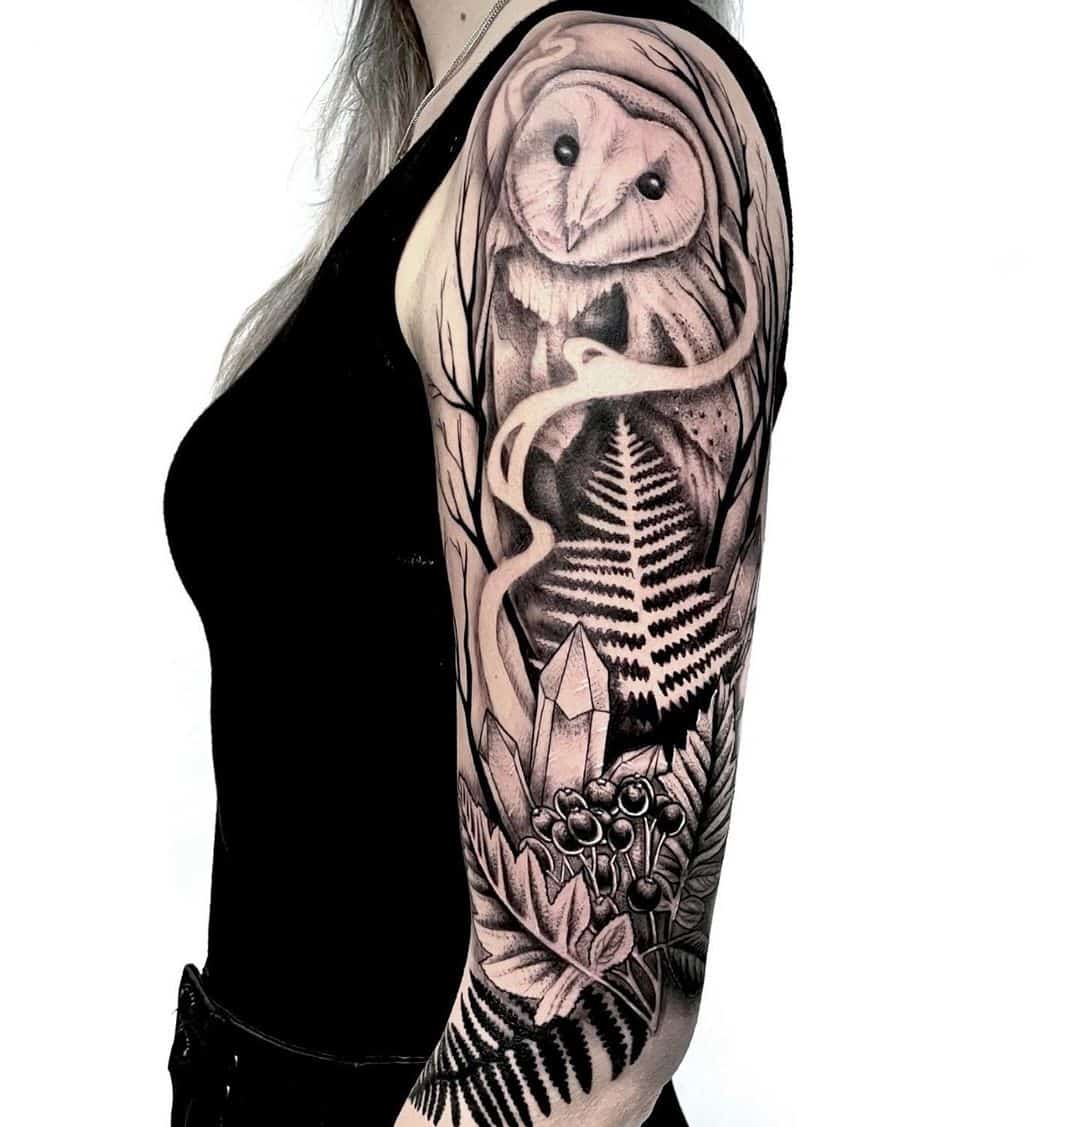 Bark owl tattoo by kadaver ink